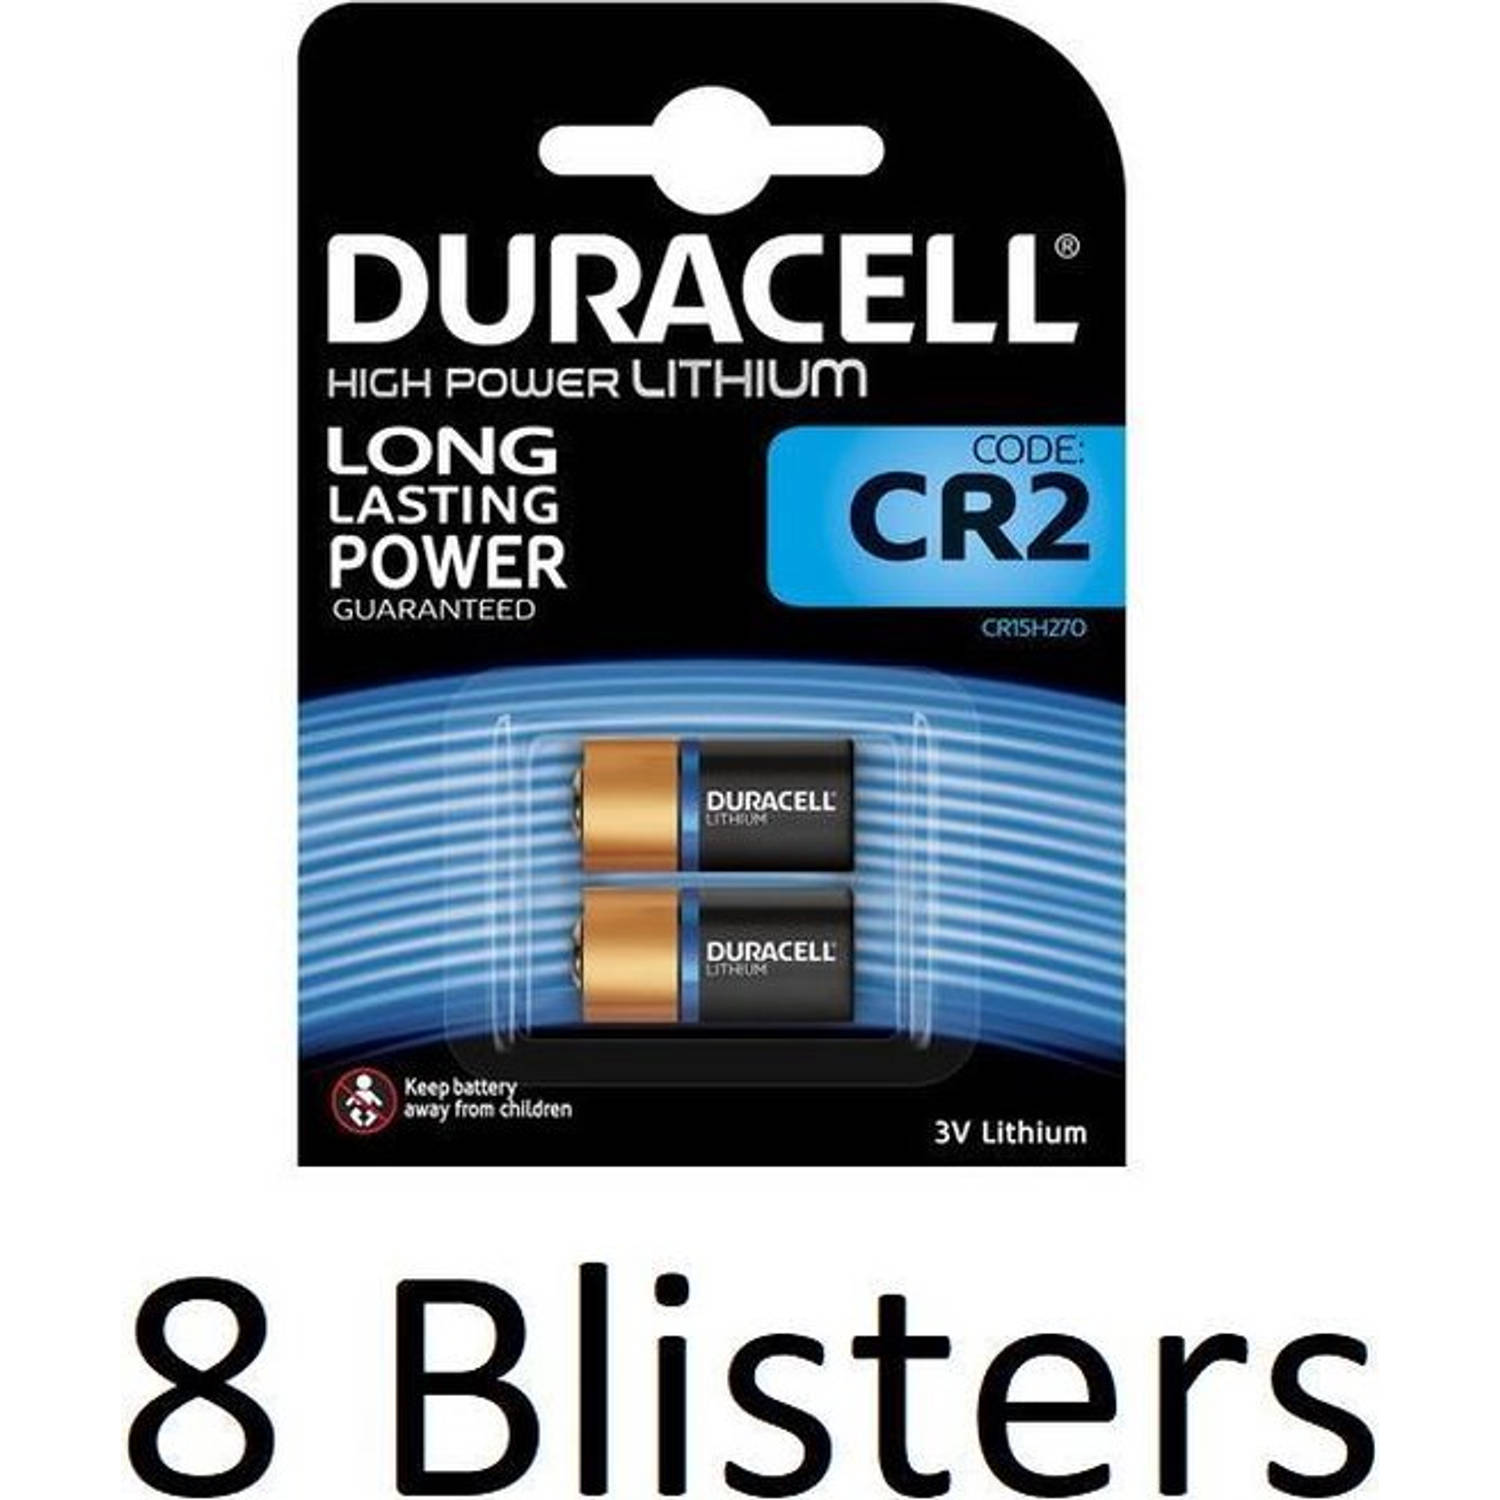 16 Stuks (8 Blisters a 2 st) Duracell CR2 High Power Lithuim Batterij